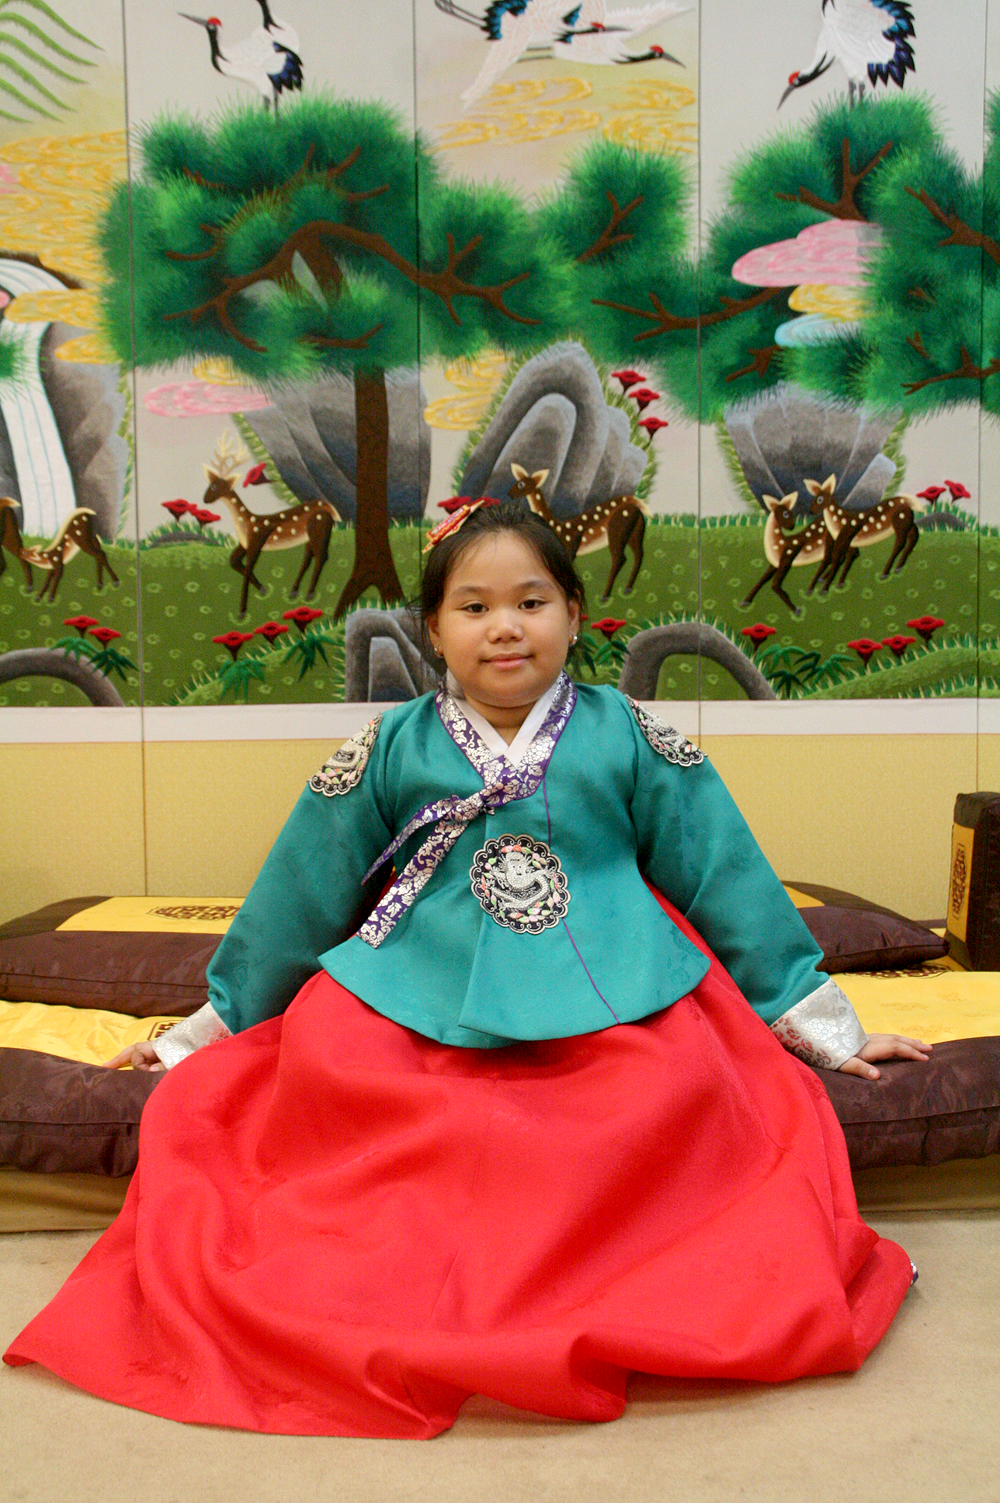 korea tourism office tourist information center - wear hanbok in seoul